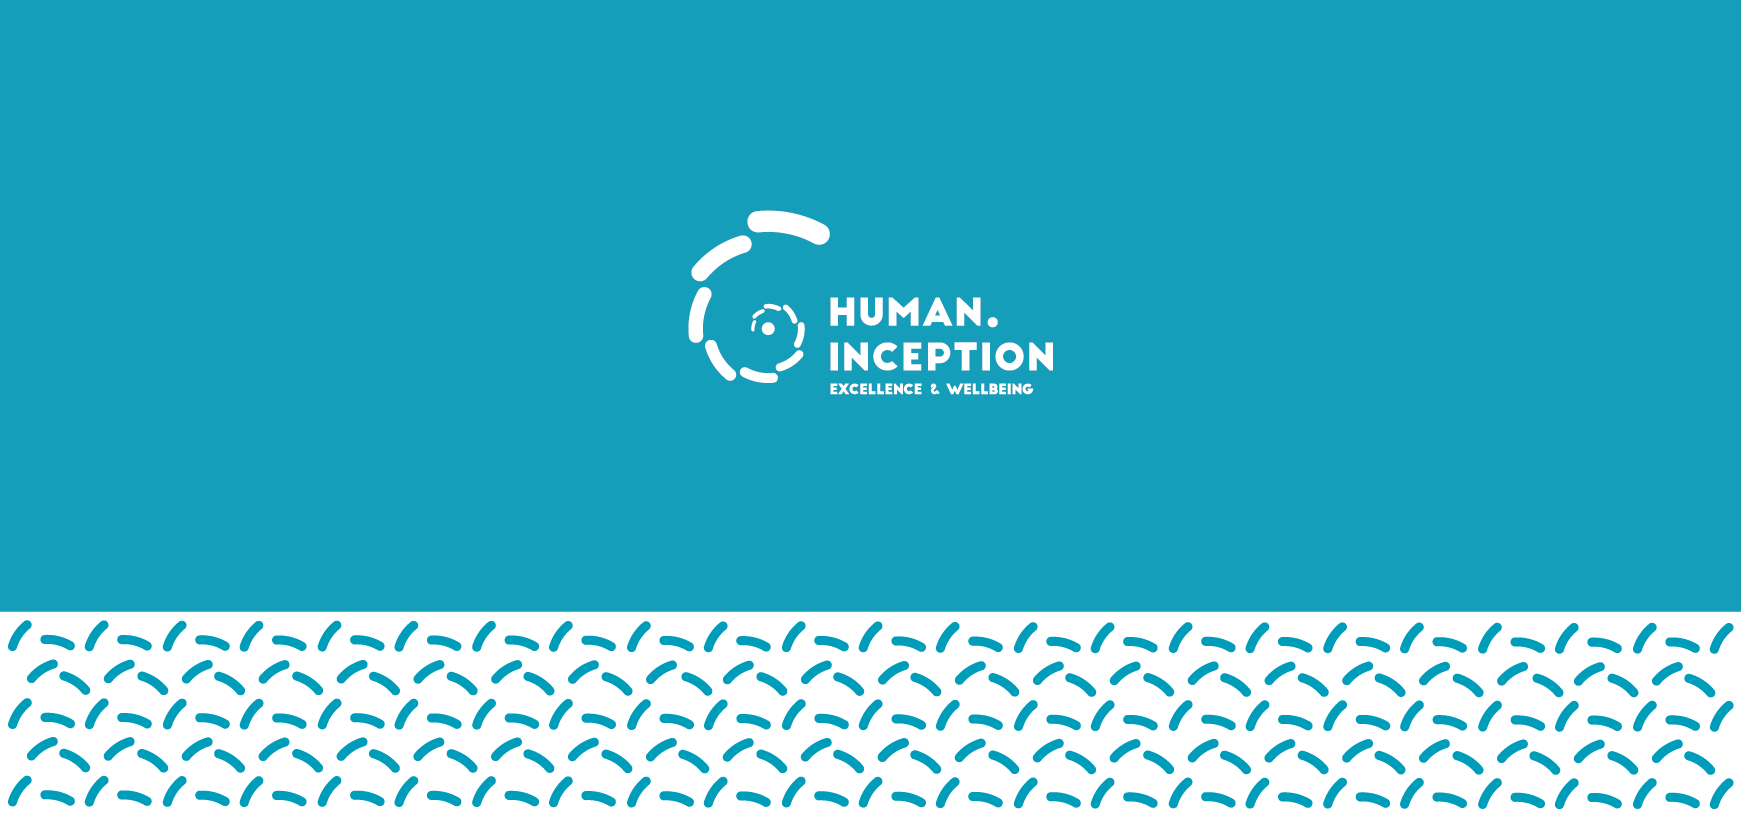 Inception Logo - Human Inception • Creative Lemons